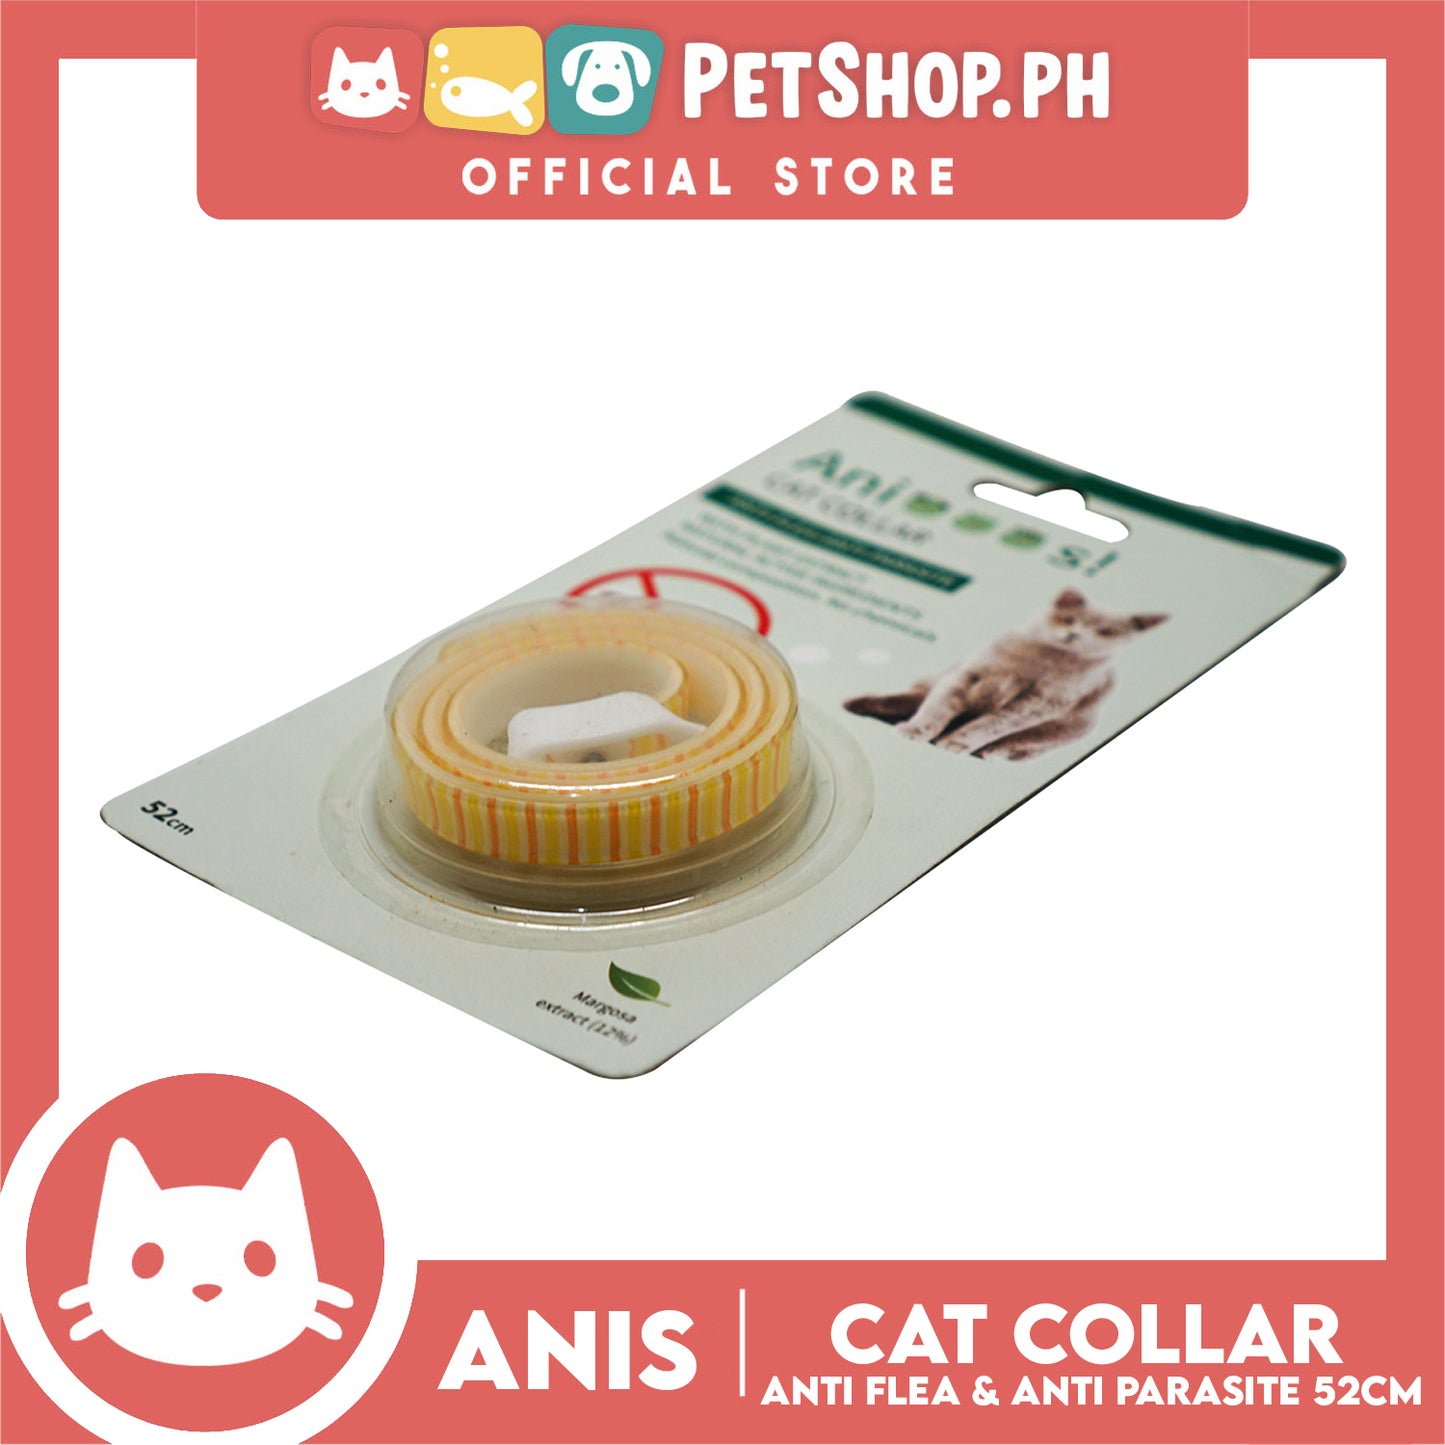 Adjustable Cat Collar Anti-Flea and Anti-Parasite 52cm with 12% Margosa Extract Flea C6713 (Yellow)